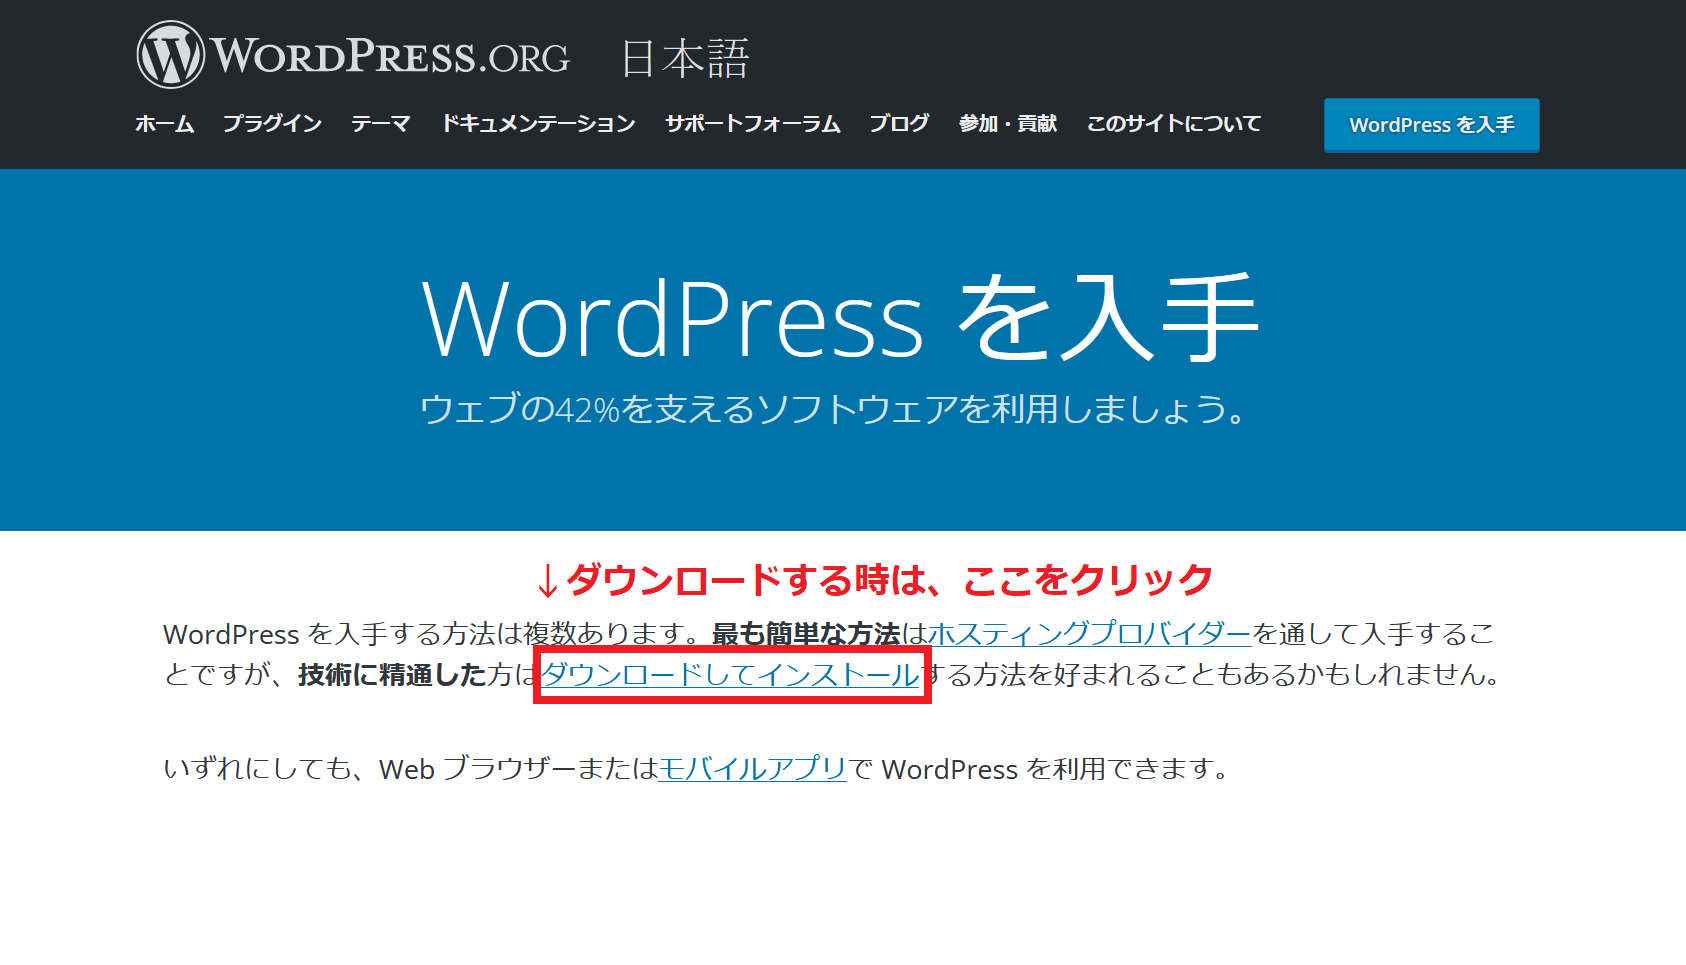 WordPressを入手